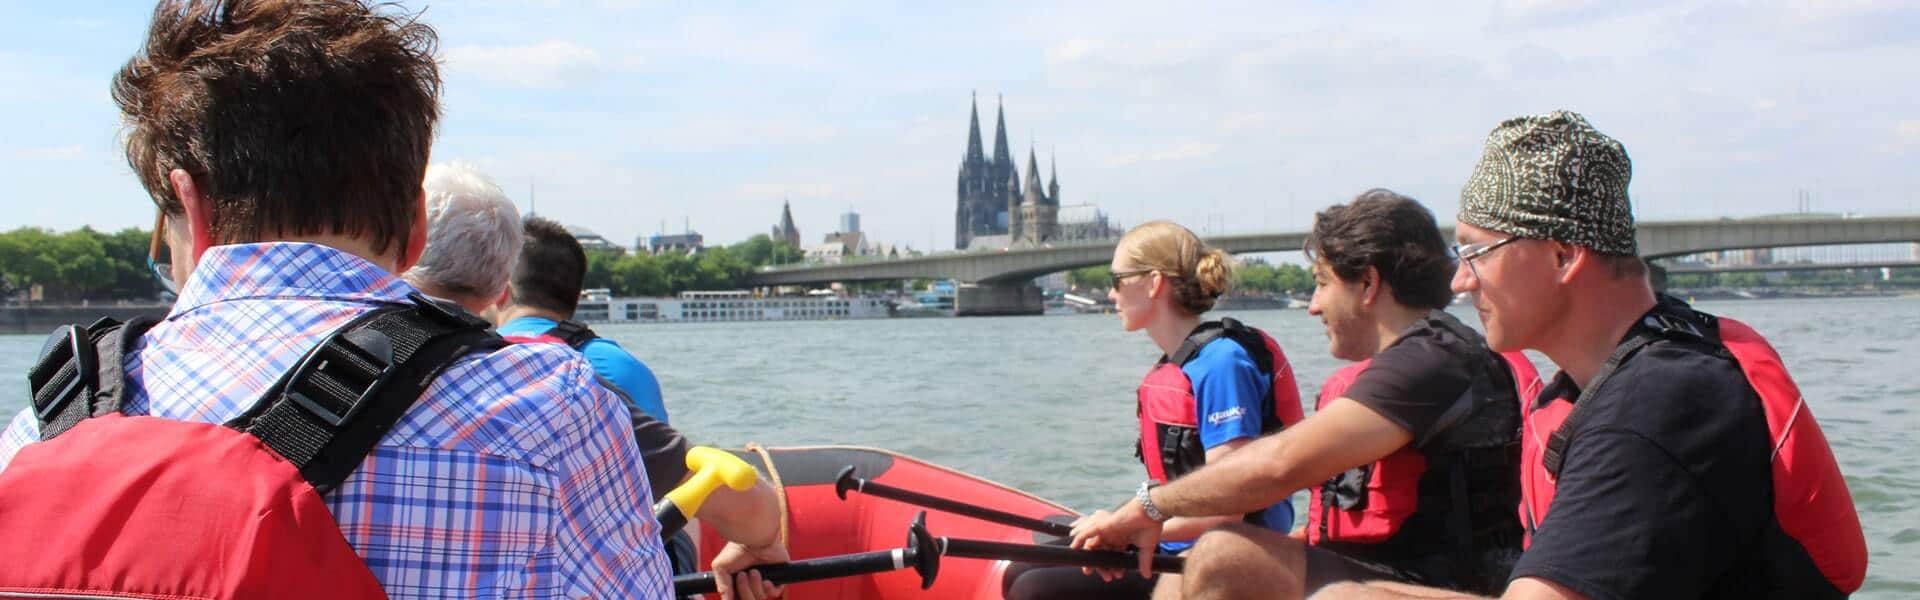 Rafting Teamevent bei Köln